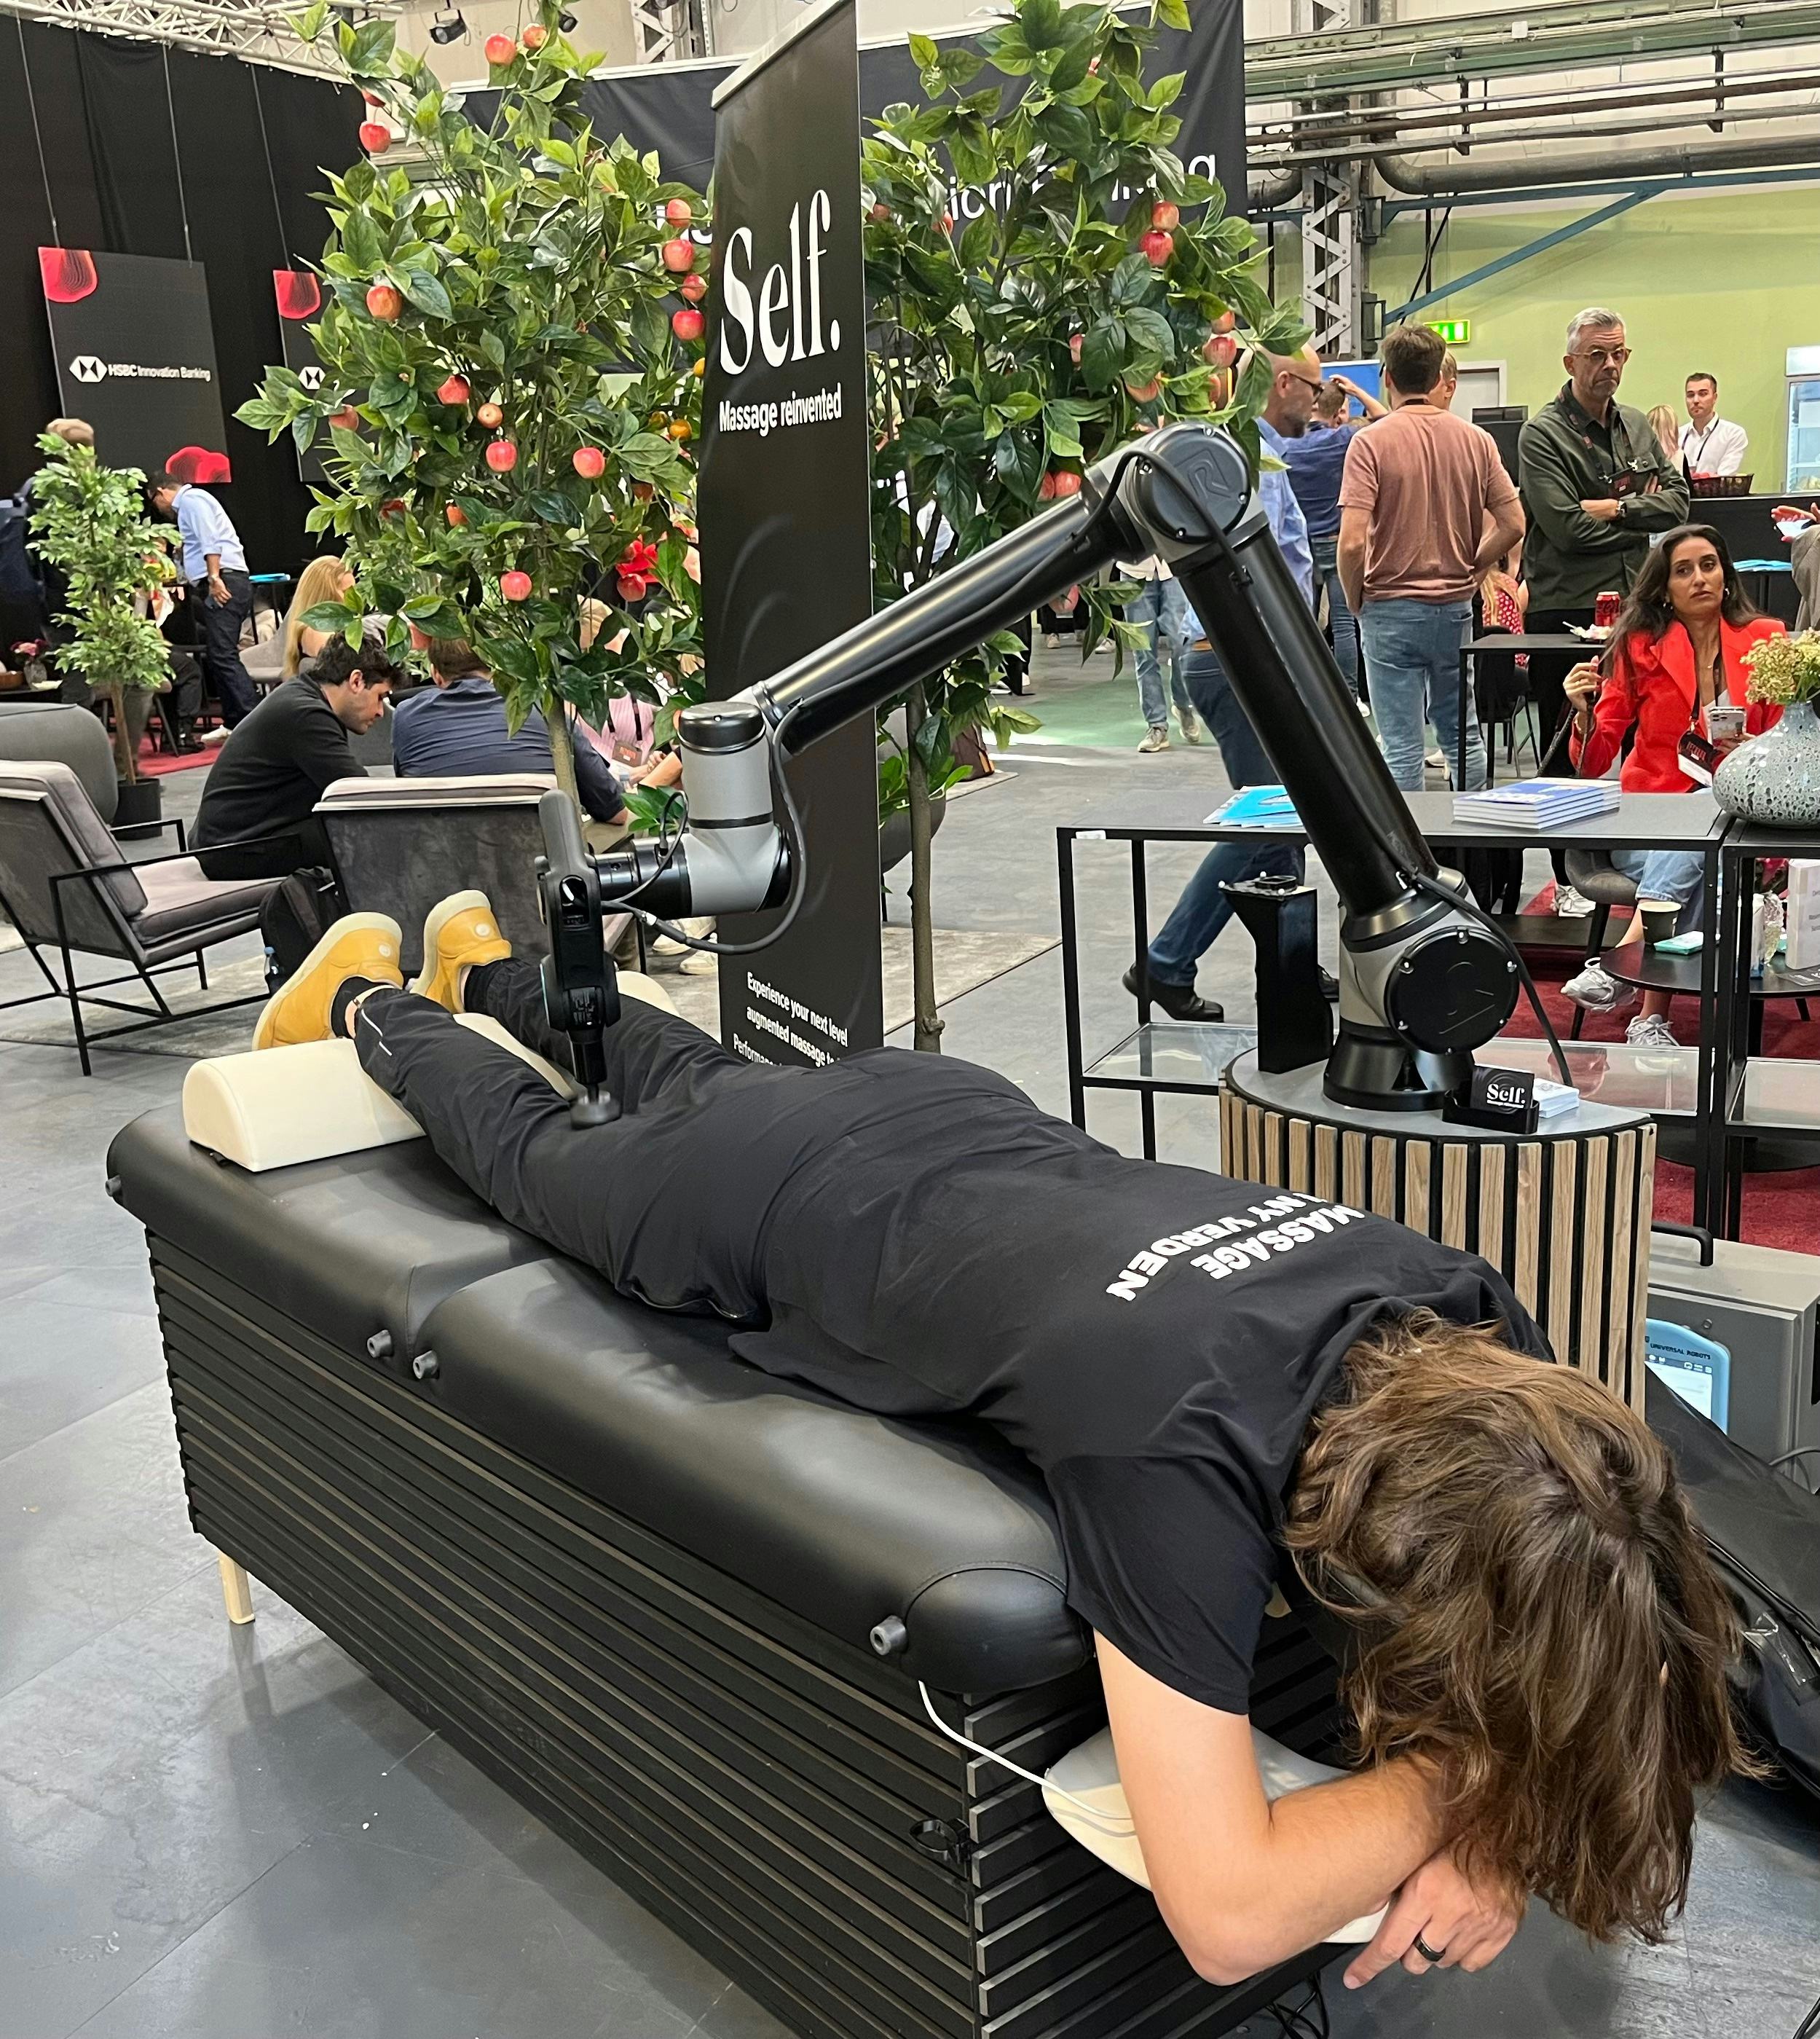 Julian getting Self massage at TechBBQ